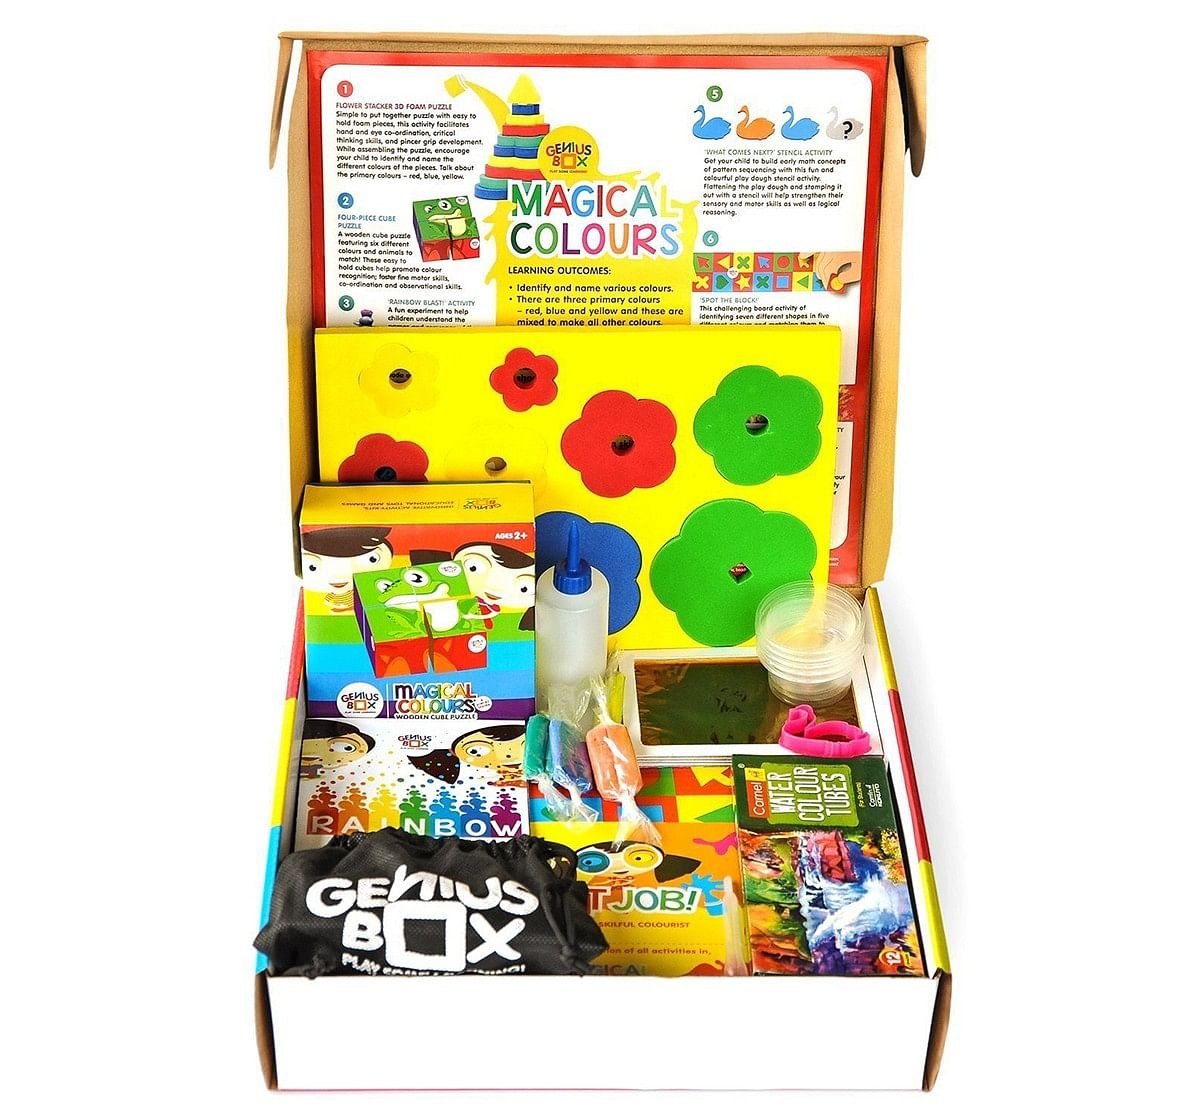 Smartivity 20 in 1 Art N Craft Kit for Boys & Girls - Multicolor